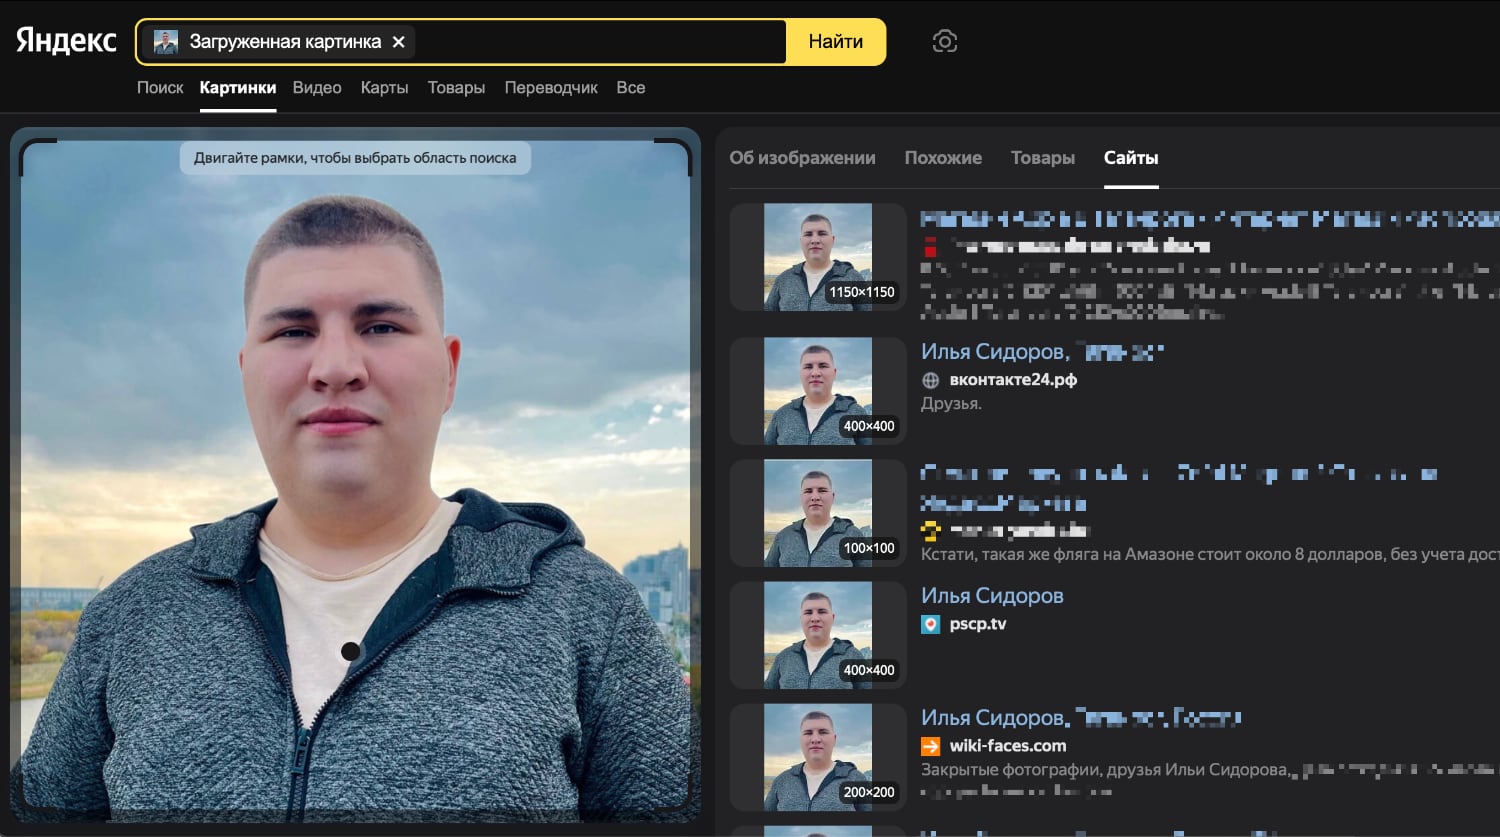 Как найти человека по фото в ВКонтакте